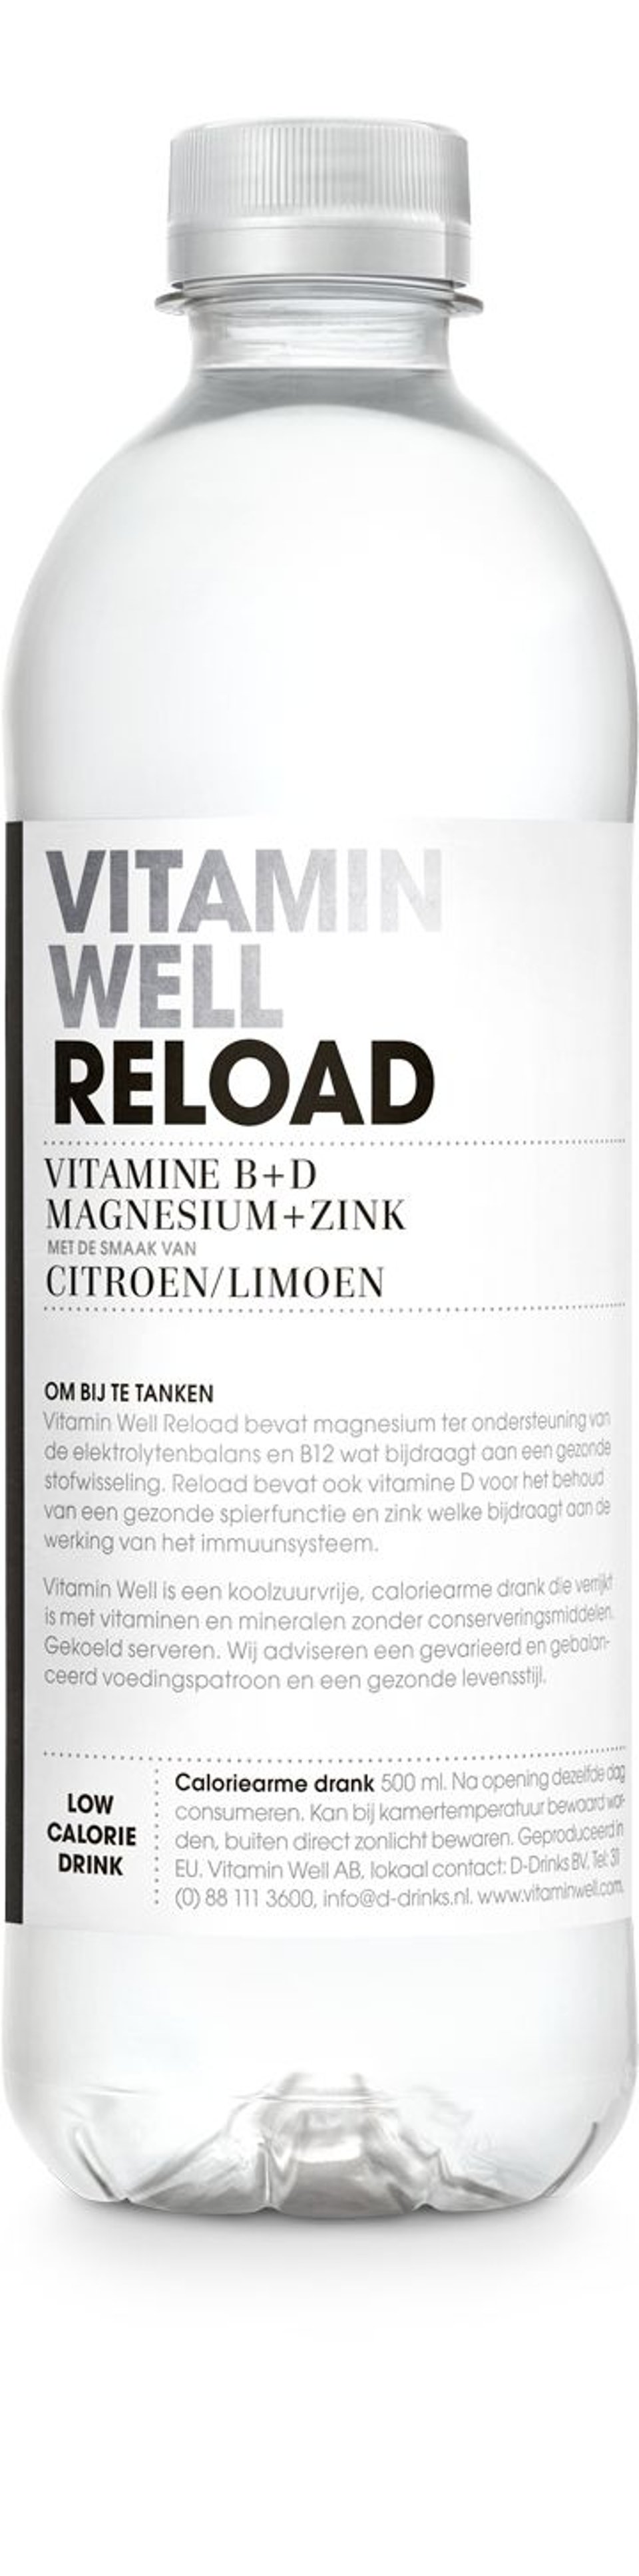 Vitamin Well: RELOAD CITROEN/LIMOEN